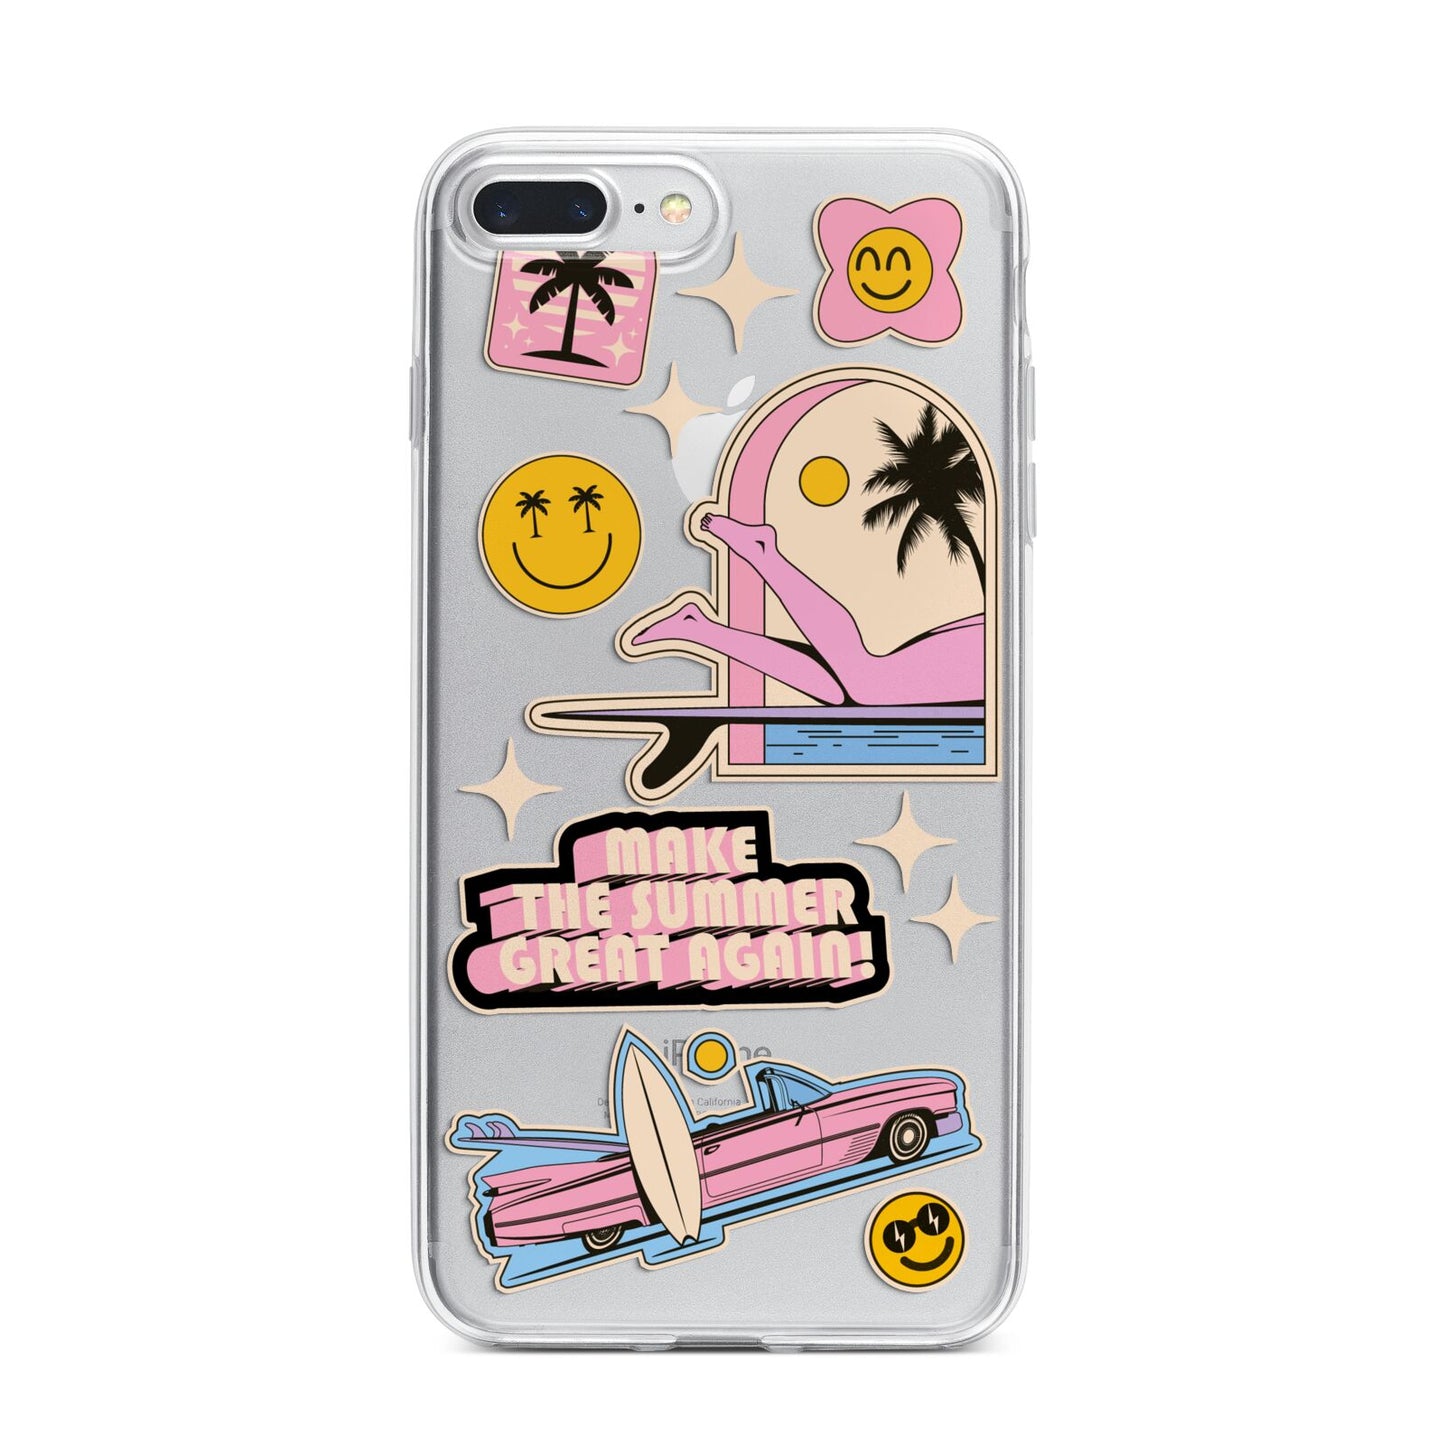 California Girl Sticker iPhone 7 Plus Bumper Case on Silver iPhone